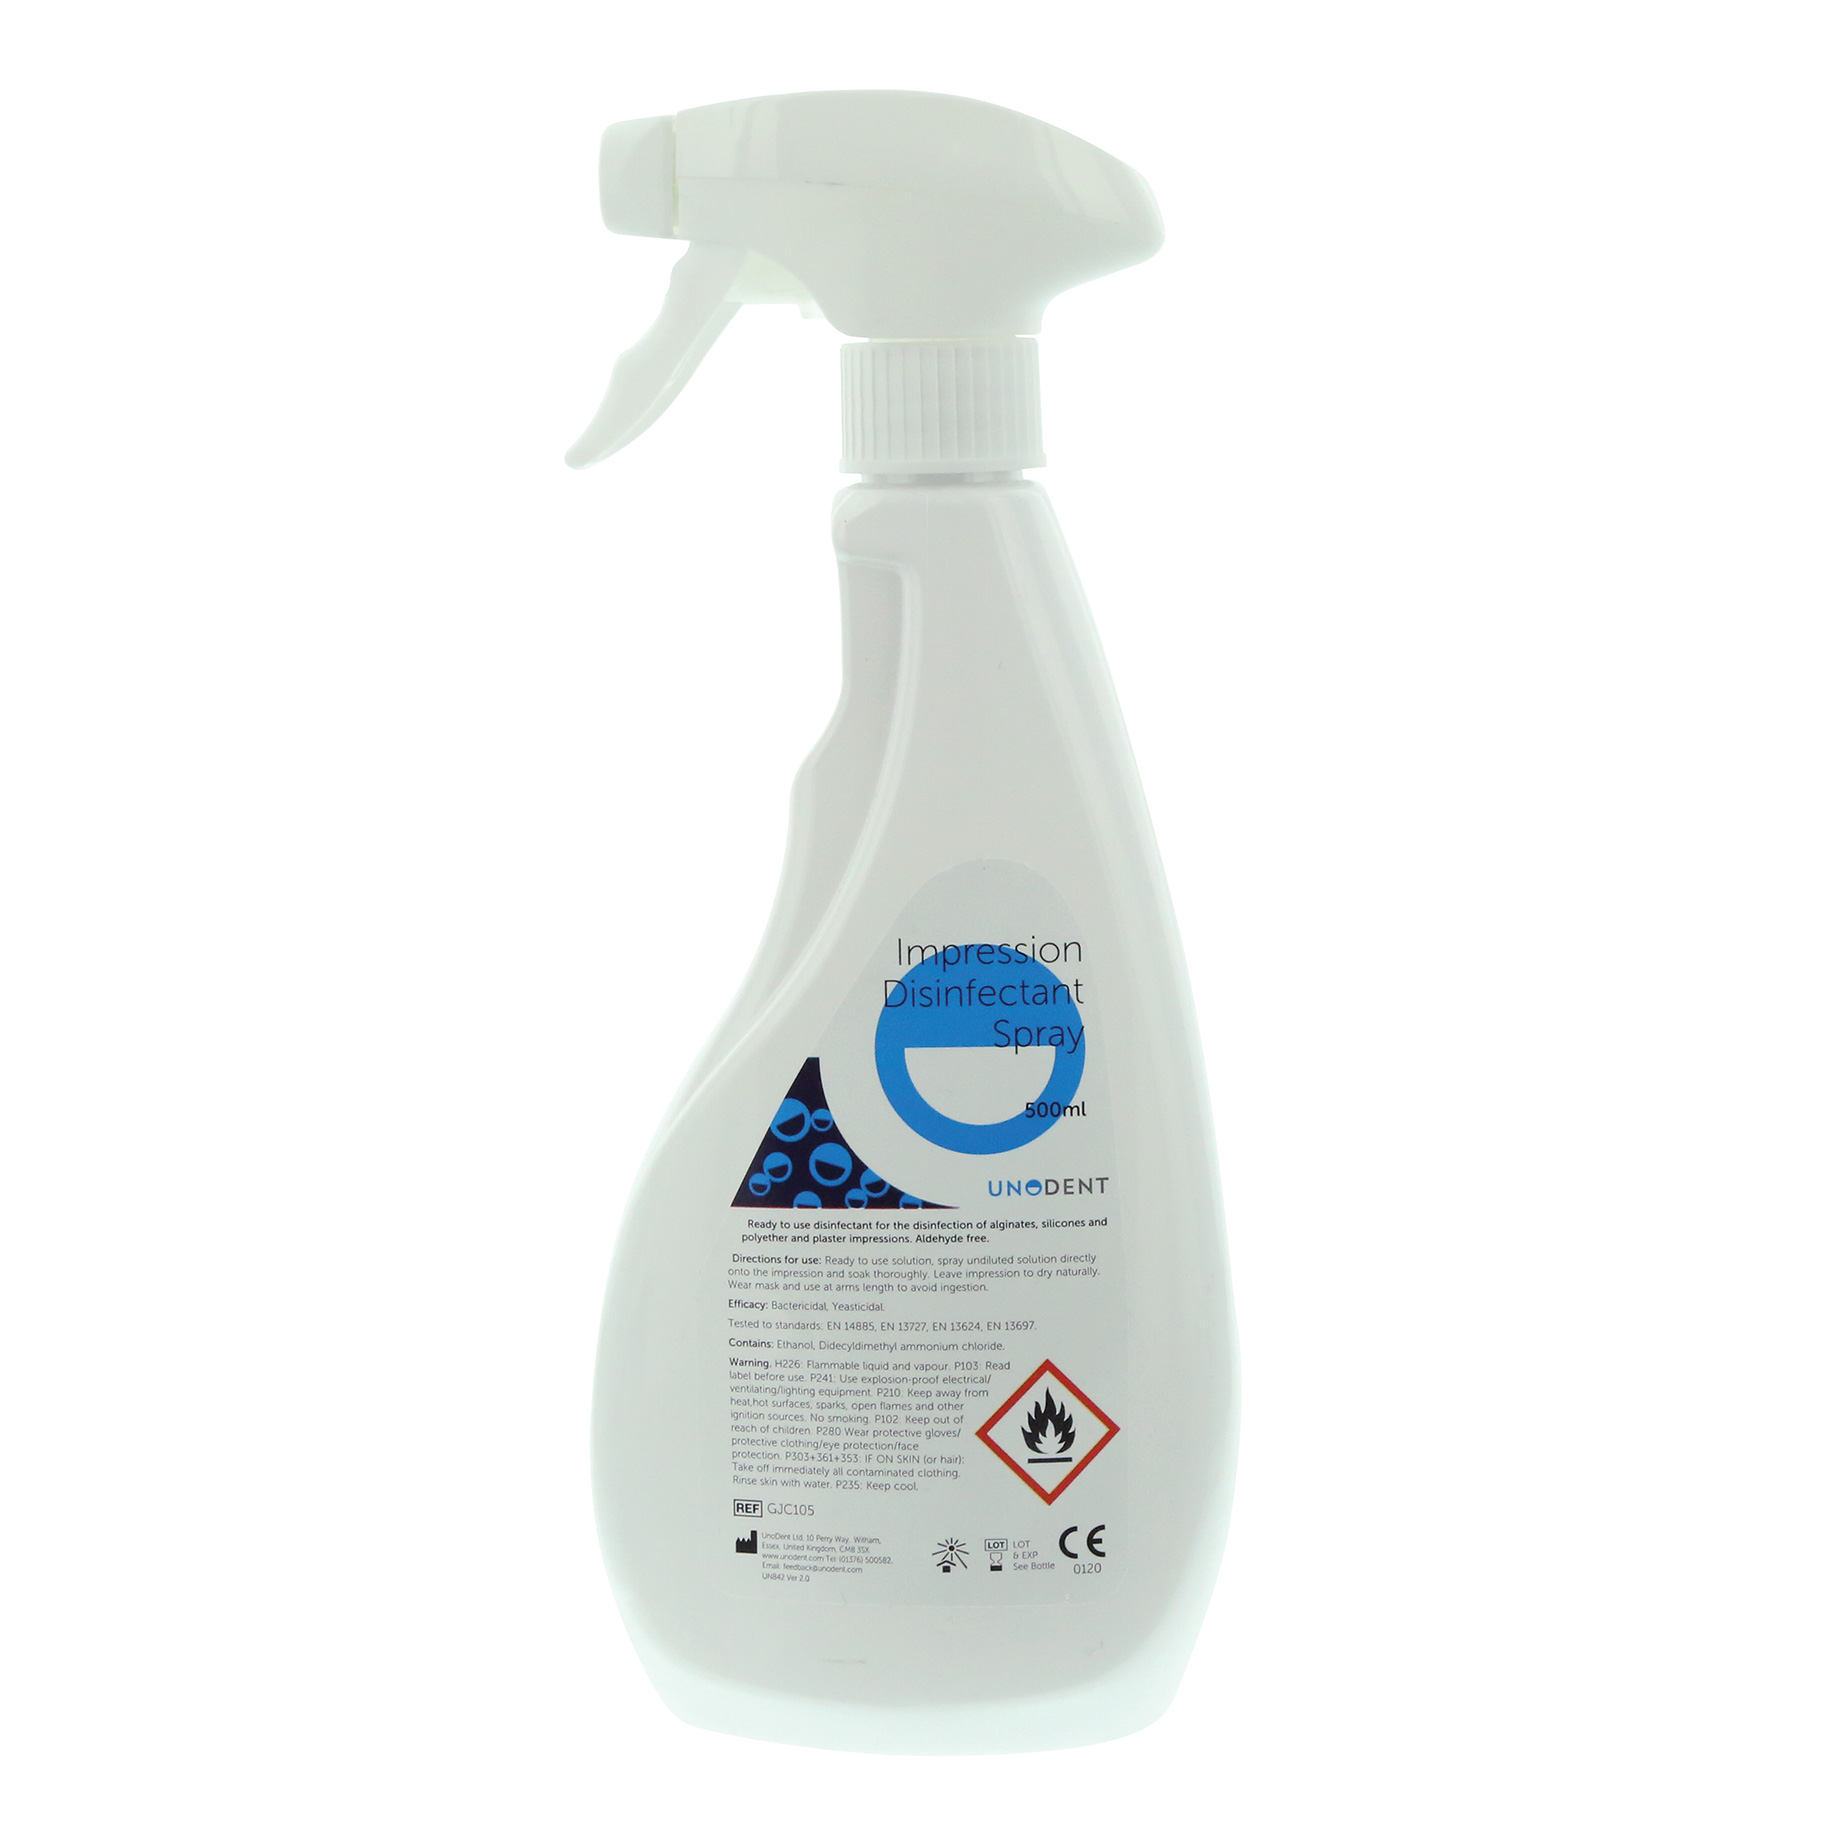 Impression Disinfectant Spray 